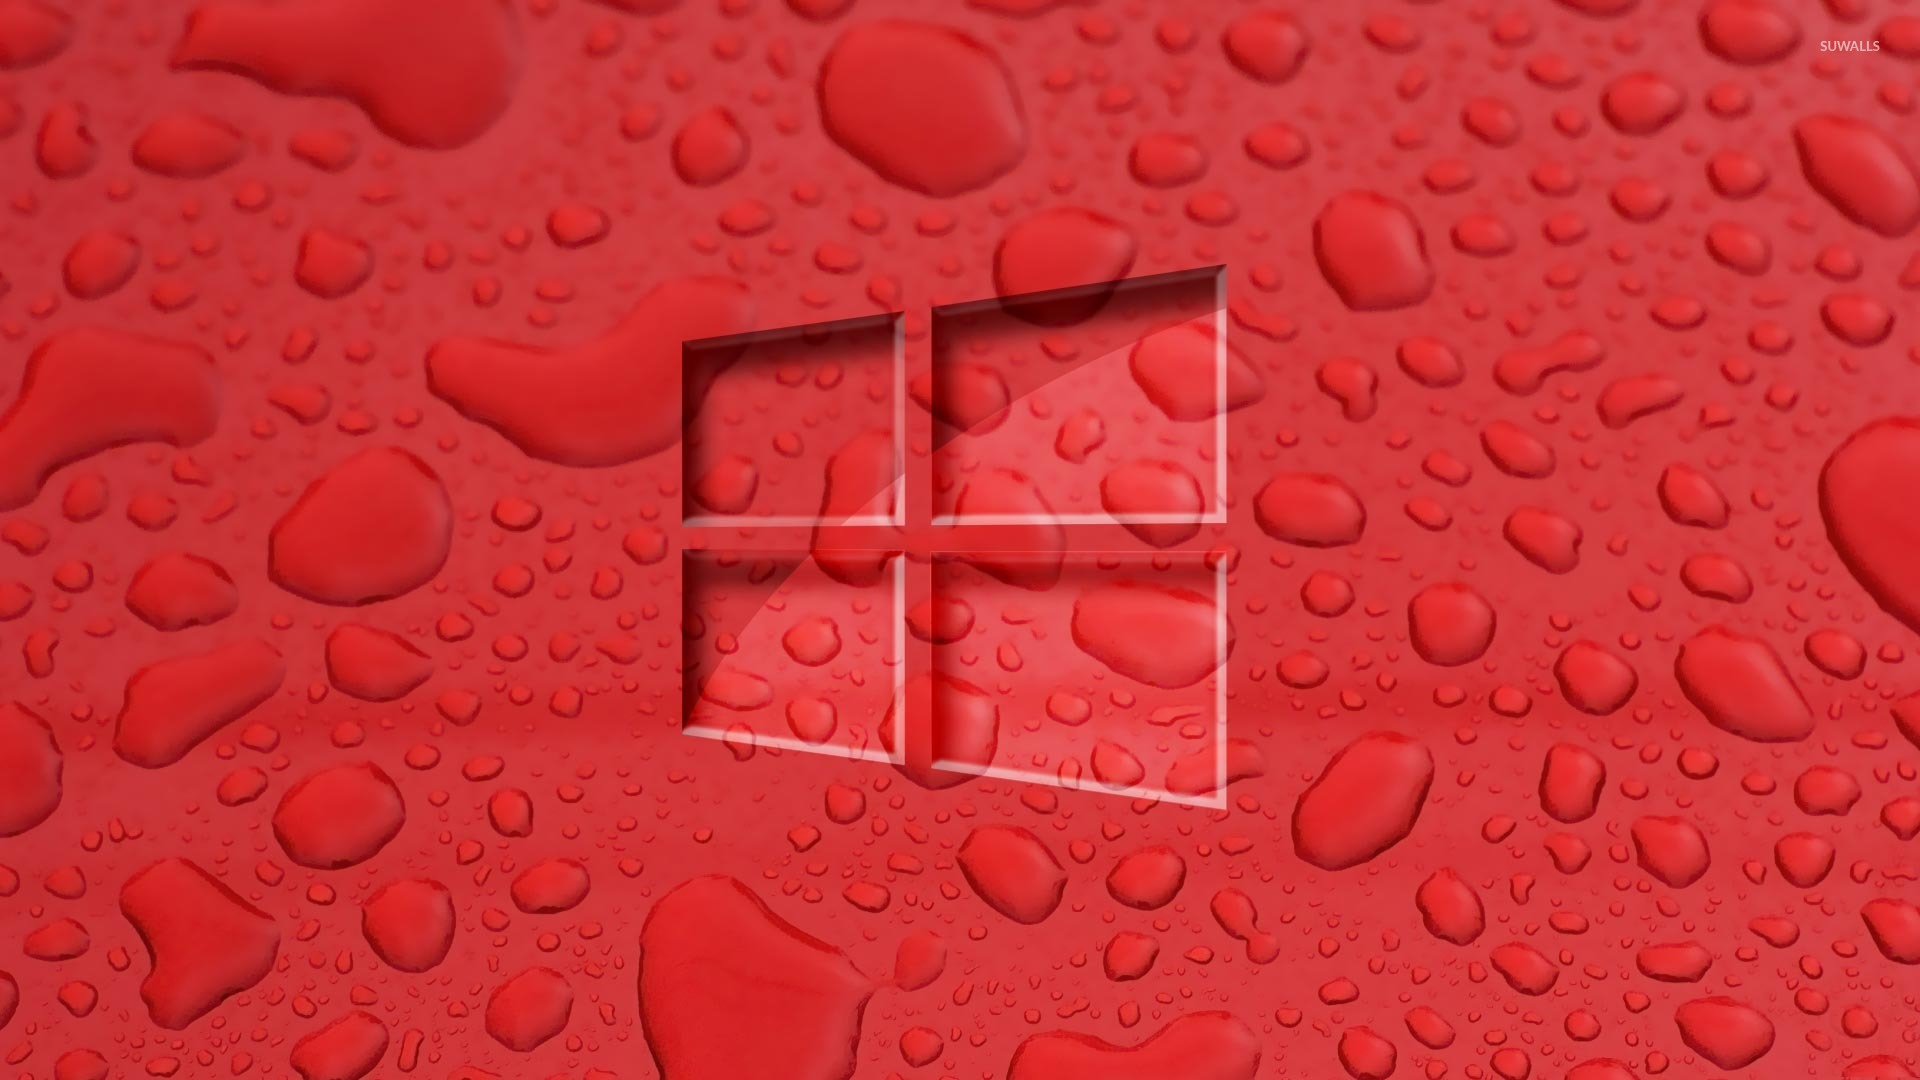 All About Windows 10 Red In 4k 4k Hd Desktop Wallpaper For Wide